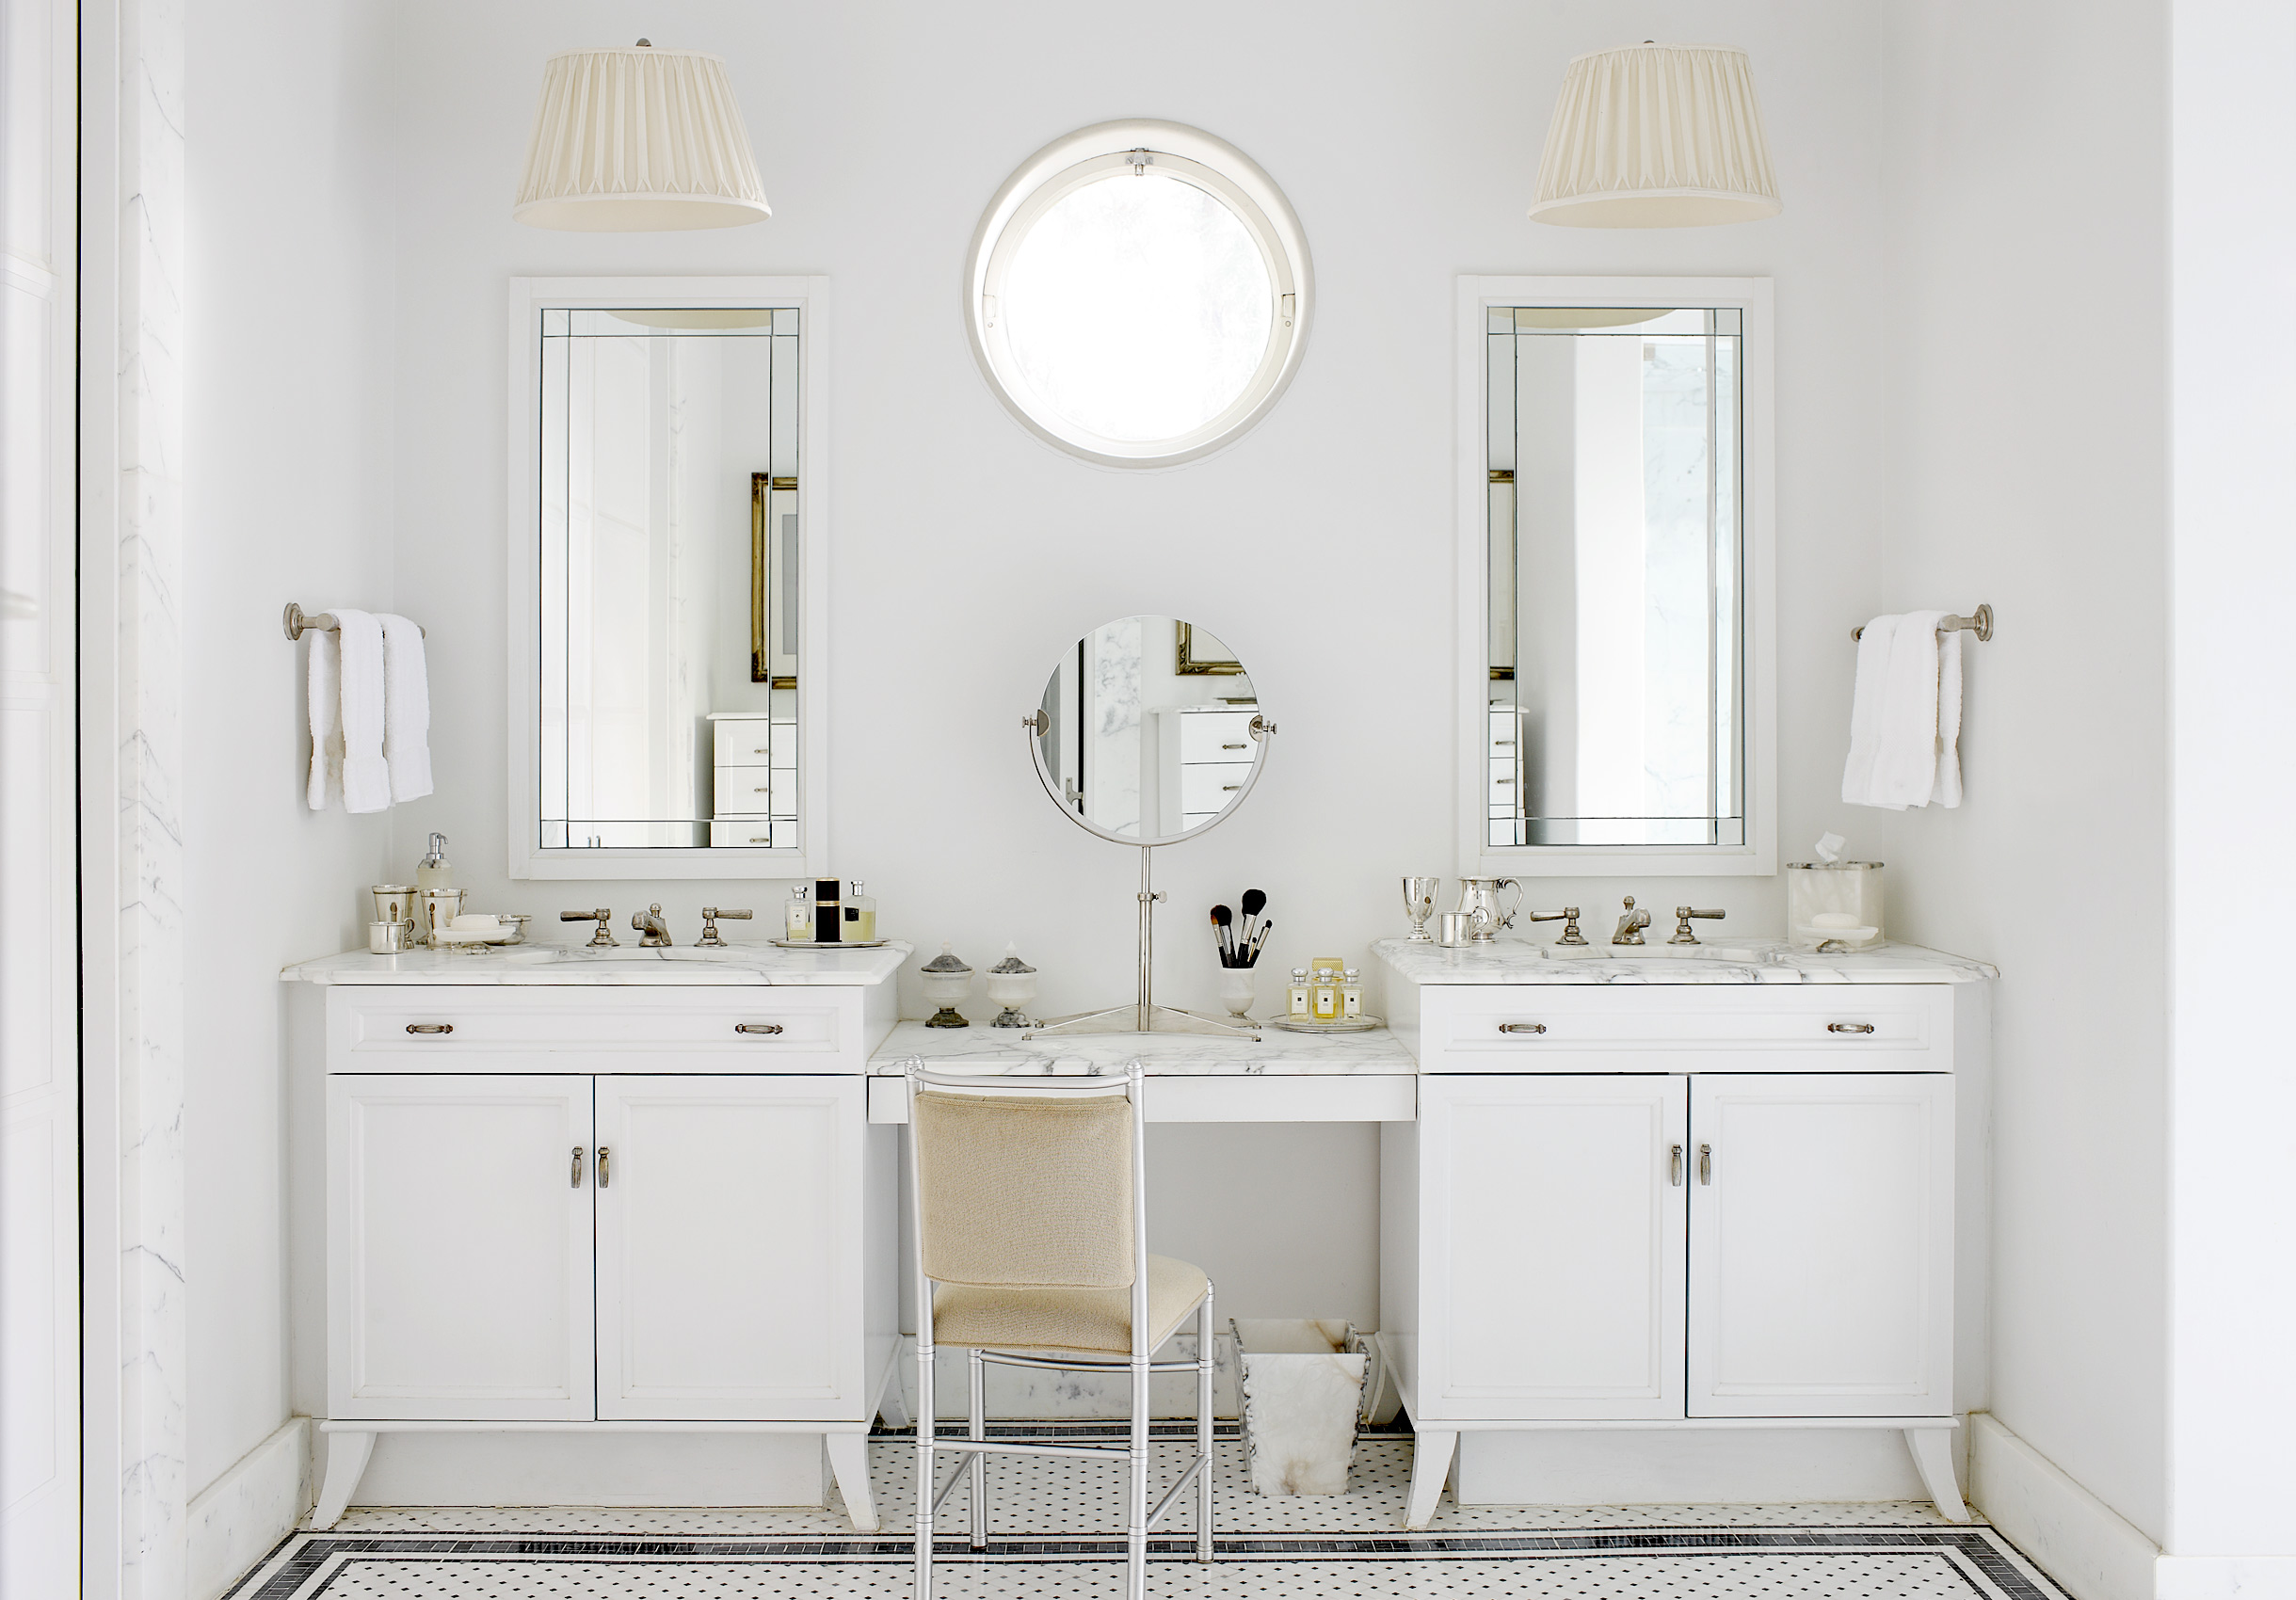 Master bath vanity by Beth Webb Interiors, photo by Mali Azima.